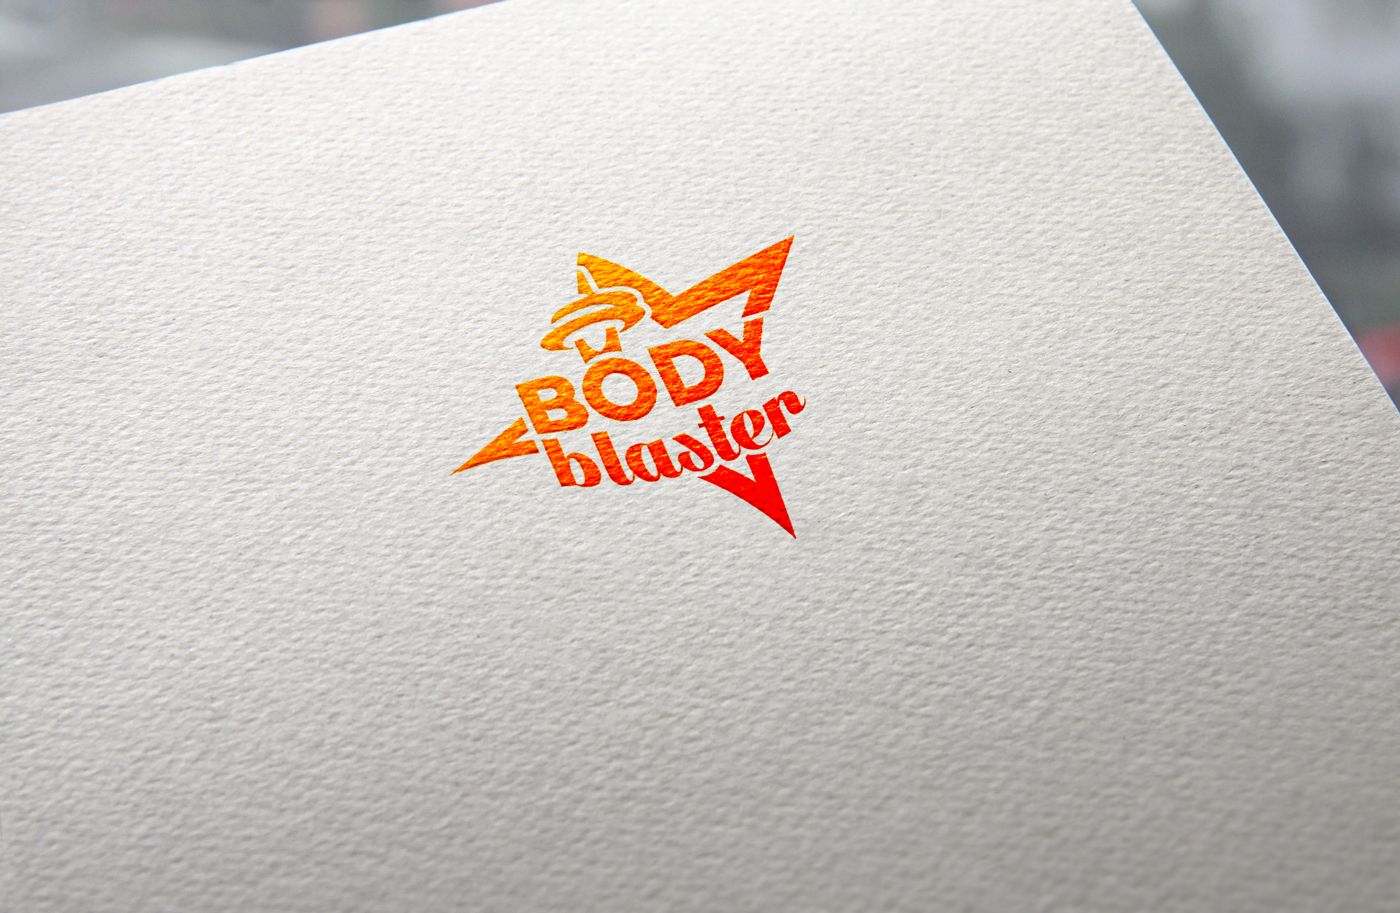 Логотип для Body blaster - дизайнер Ninpo